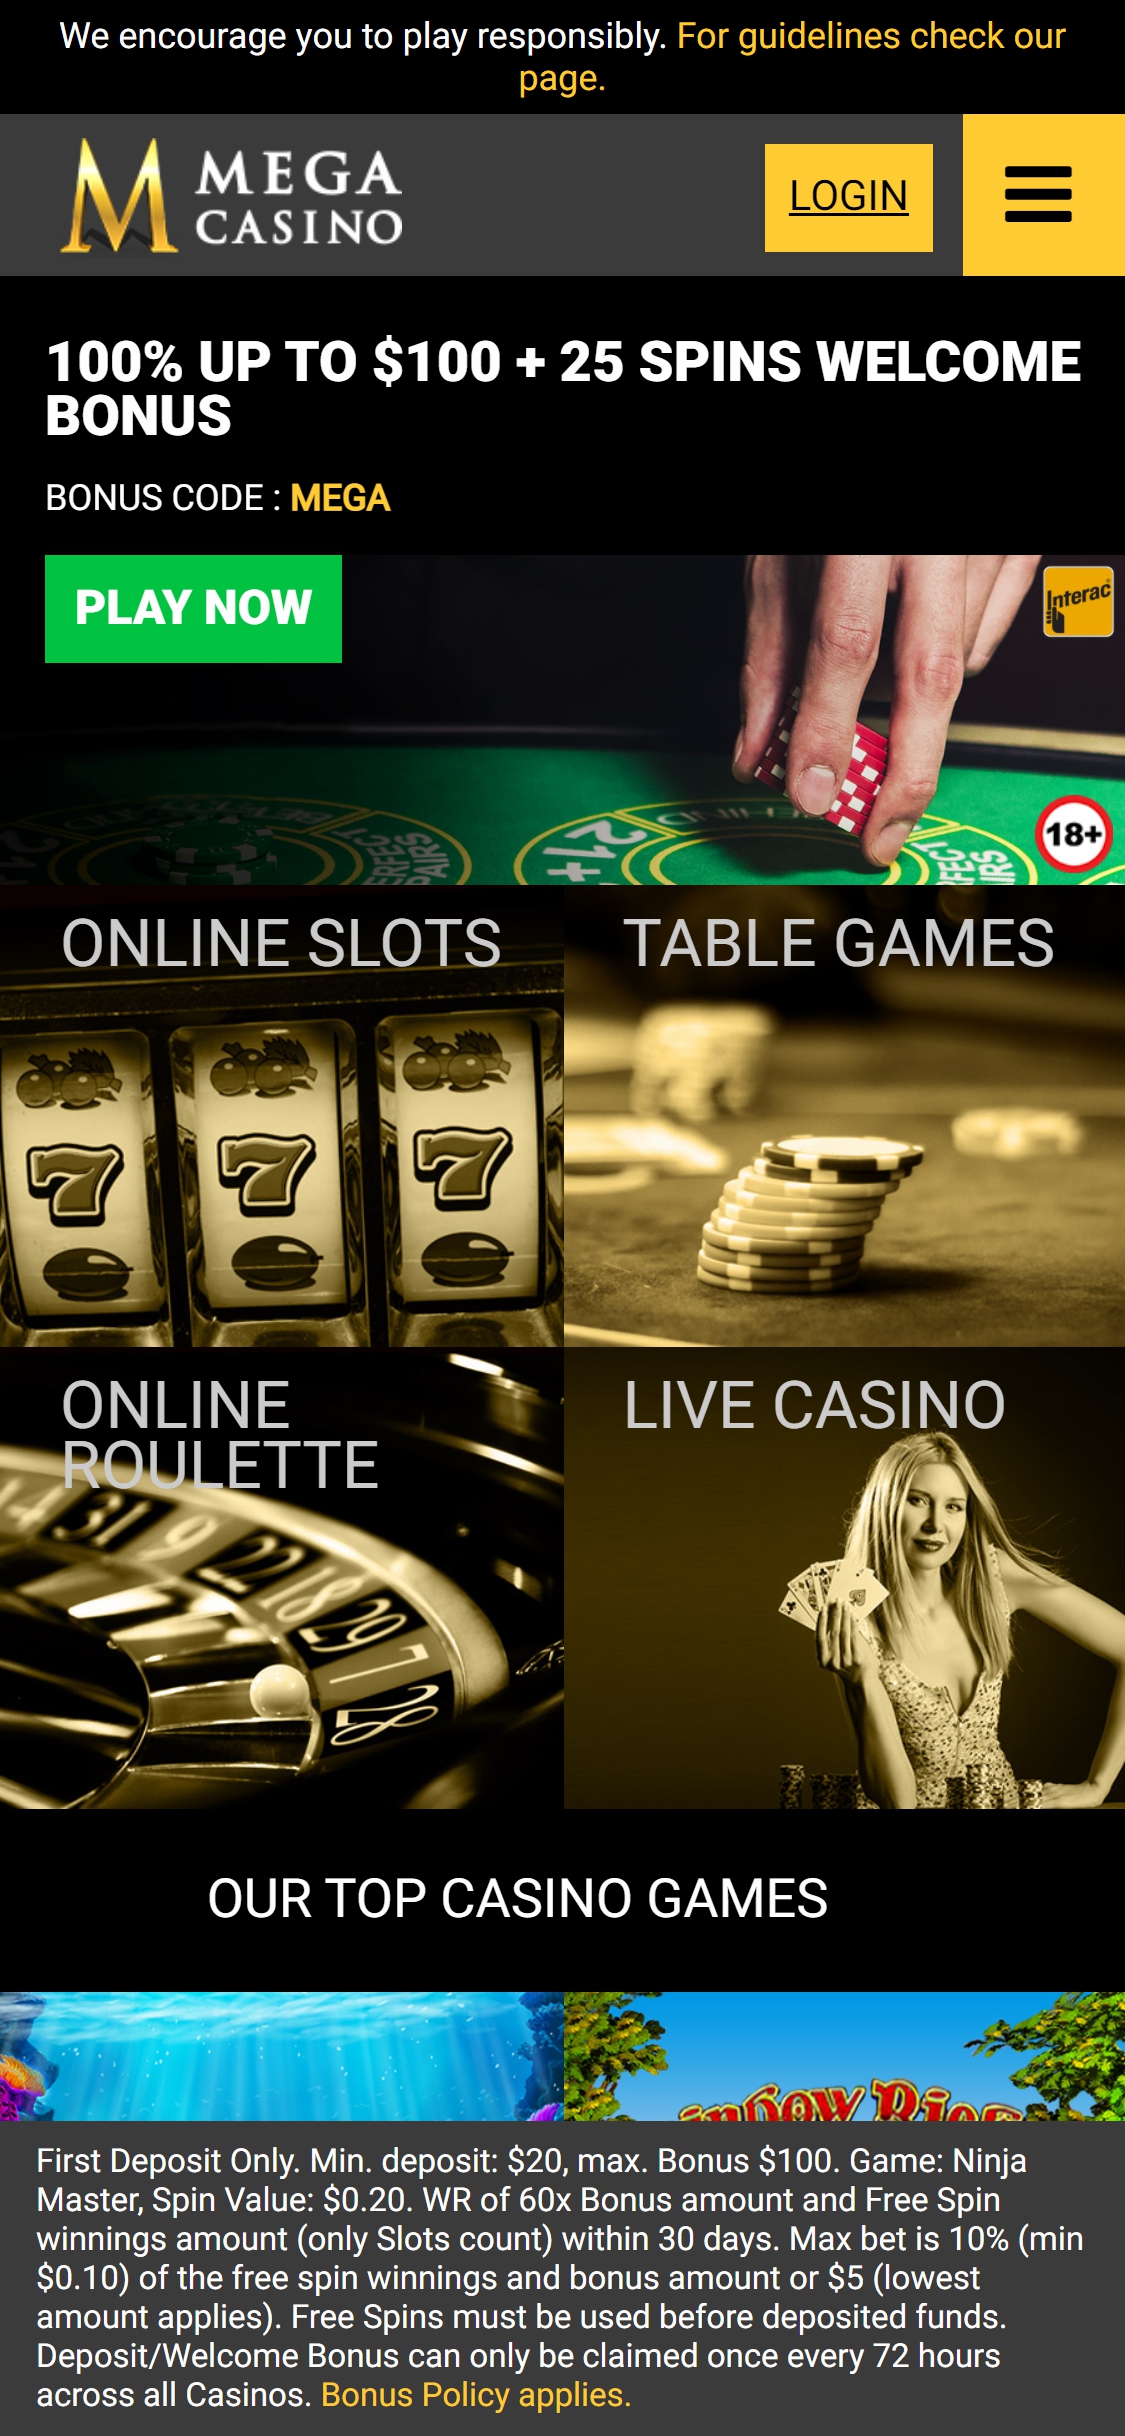 Mega Casino Mobile Review